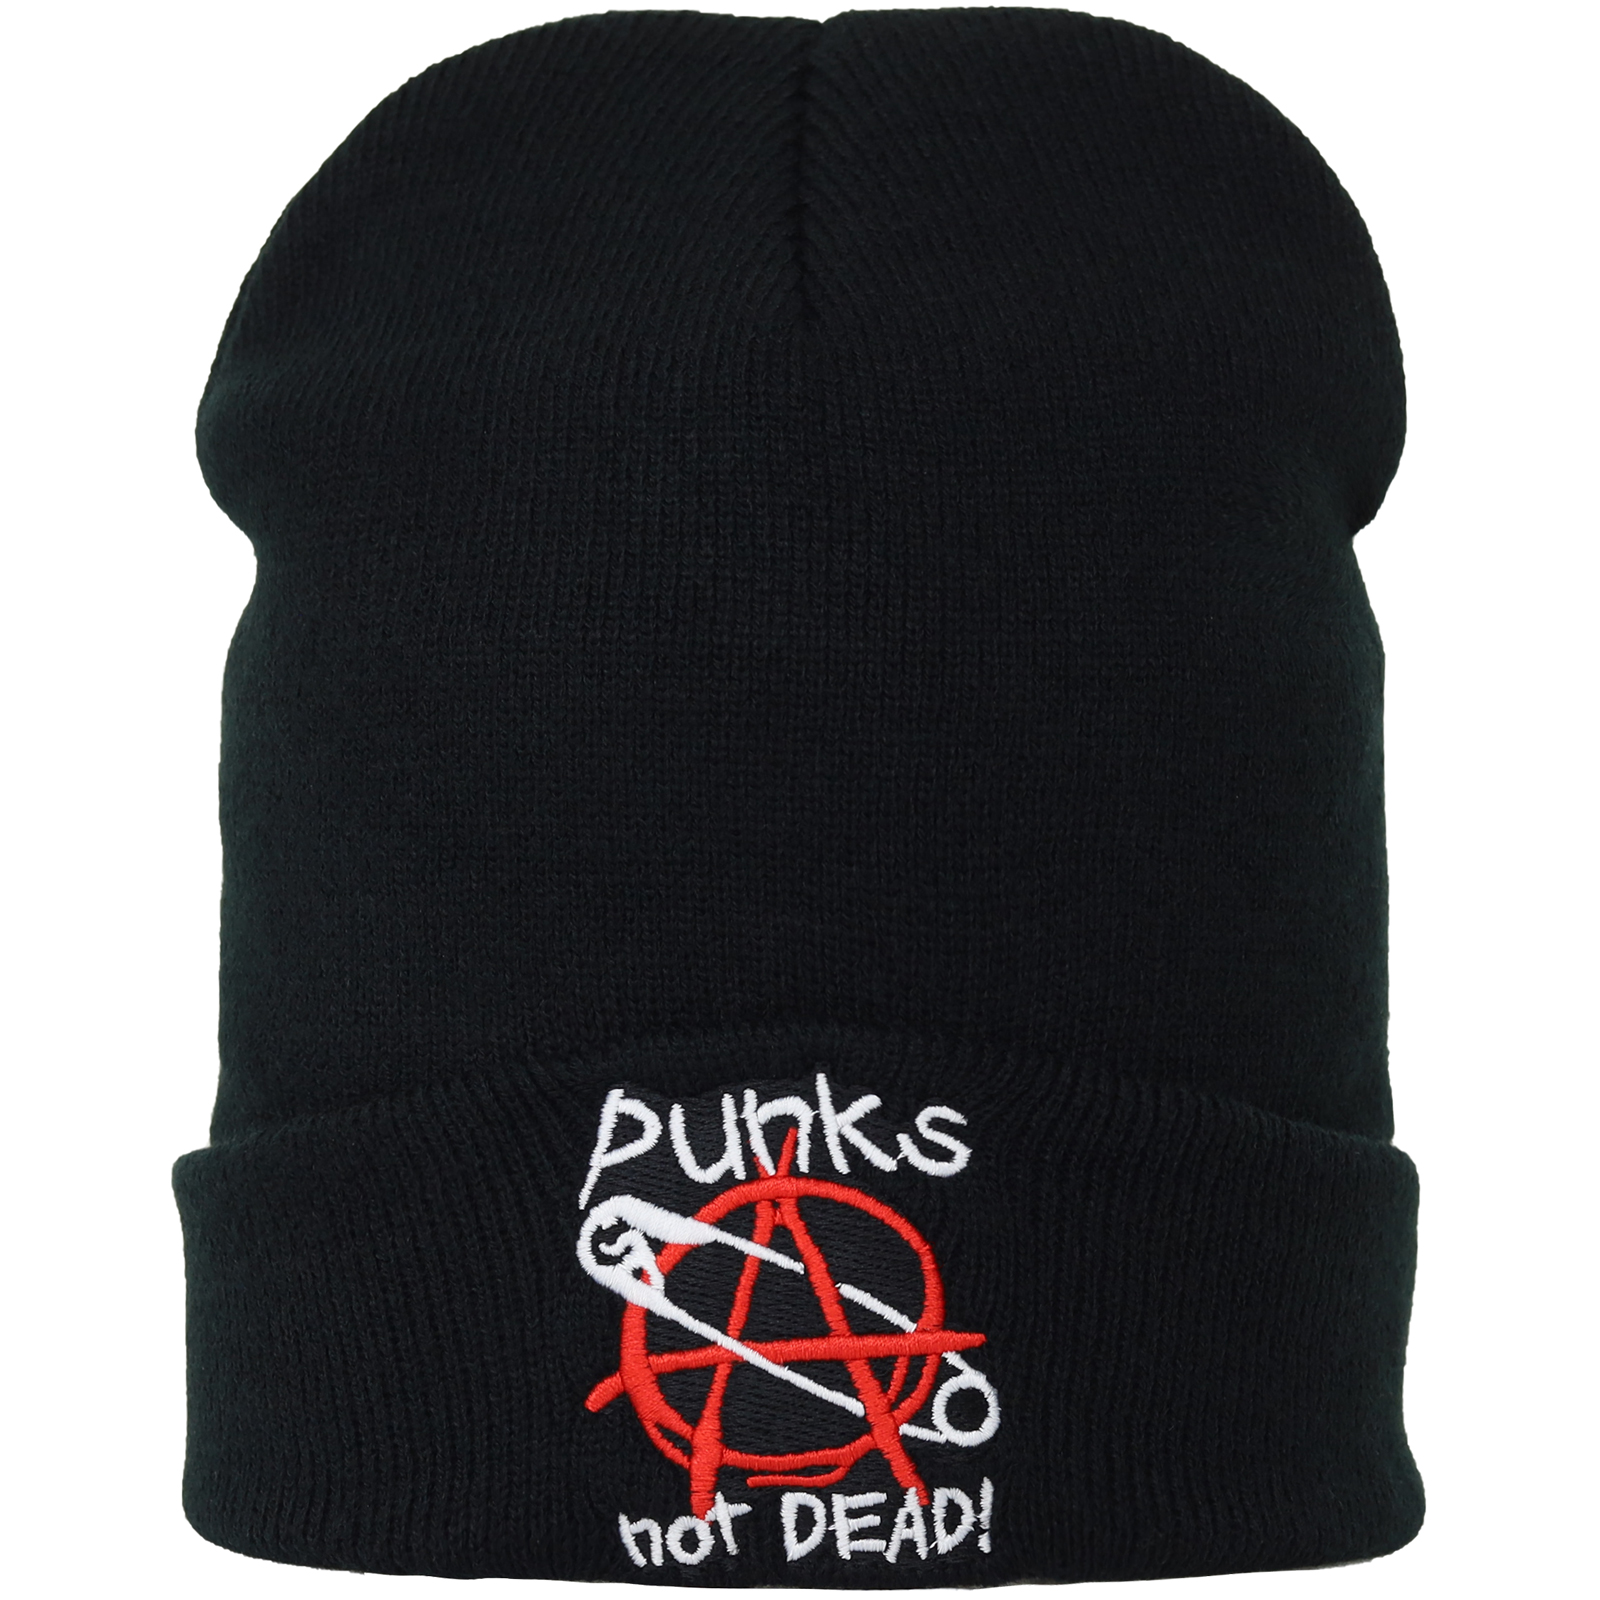 Punks are not dead - Strickmütze